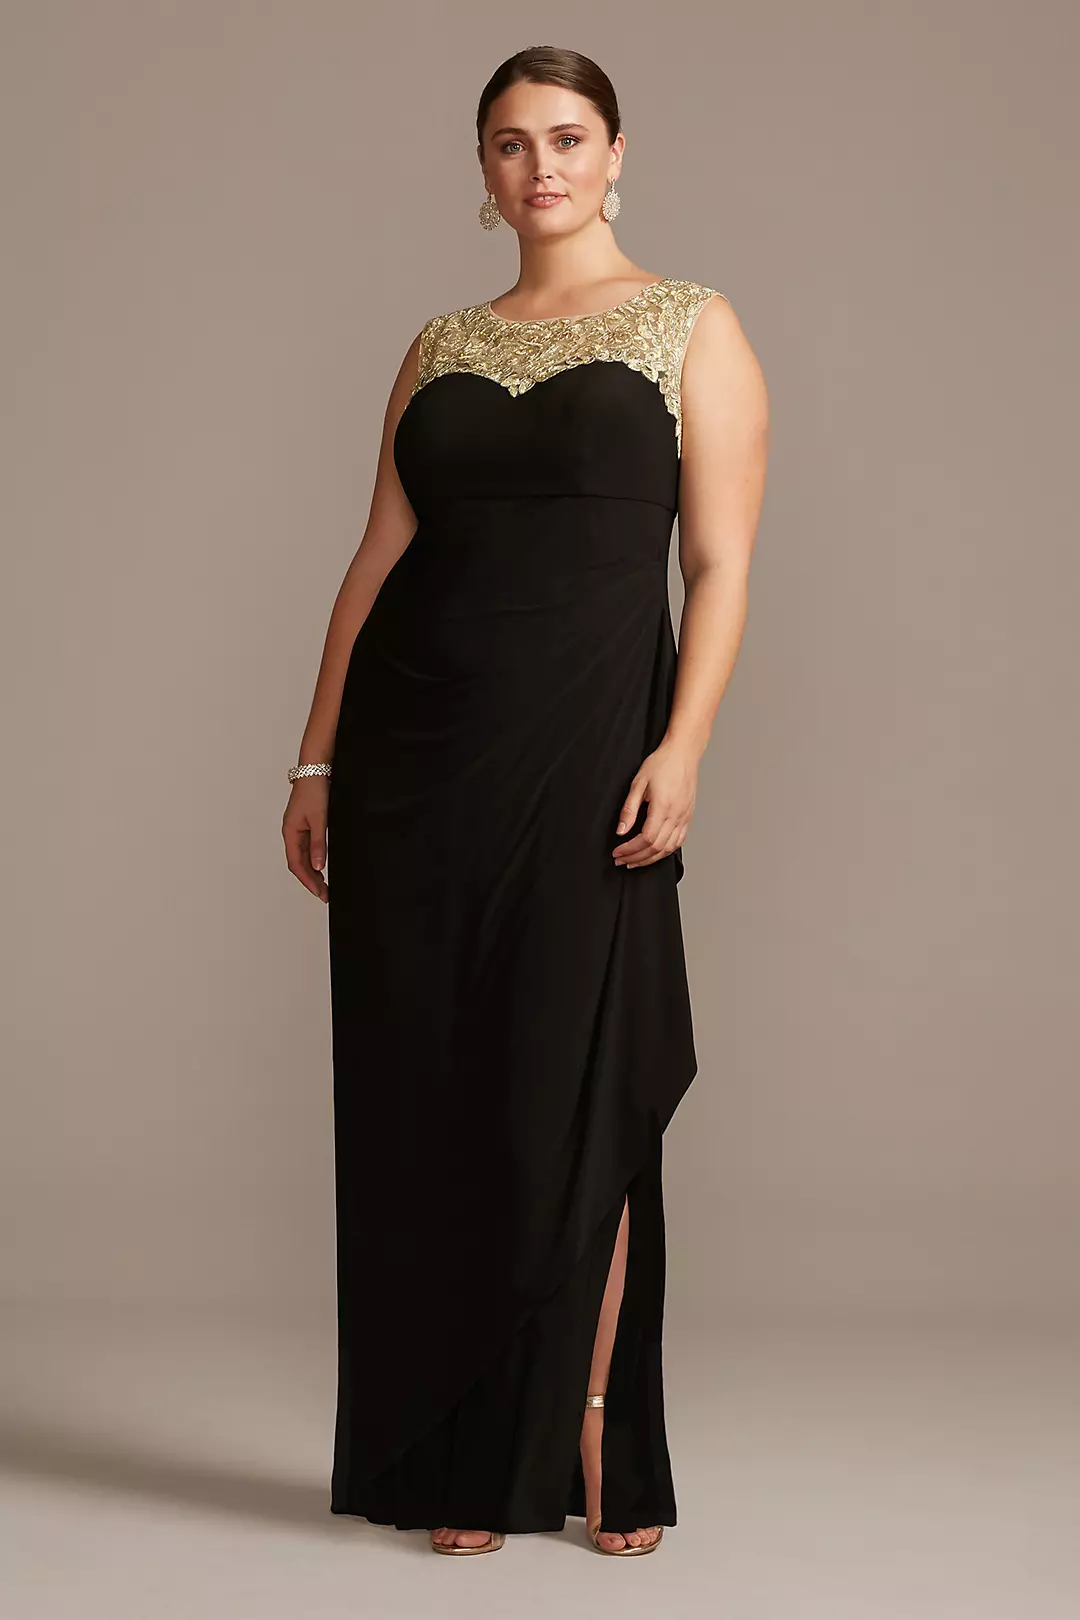 Matte Jersey Plus Size Dress with Embellishment Image